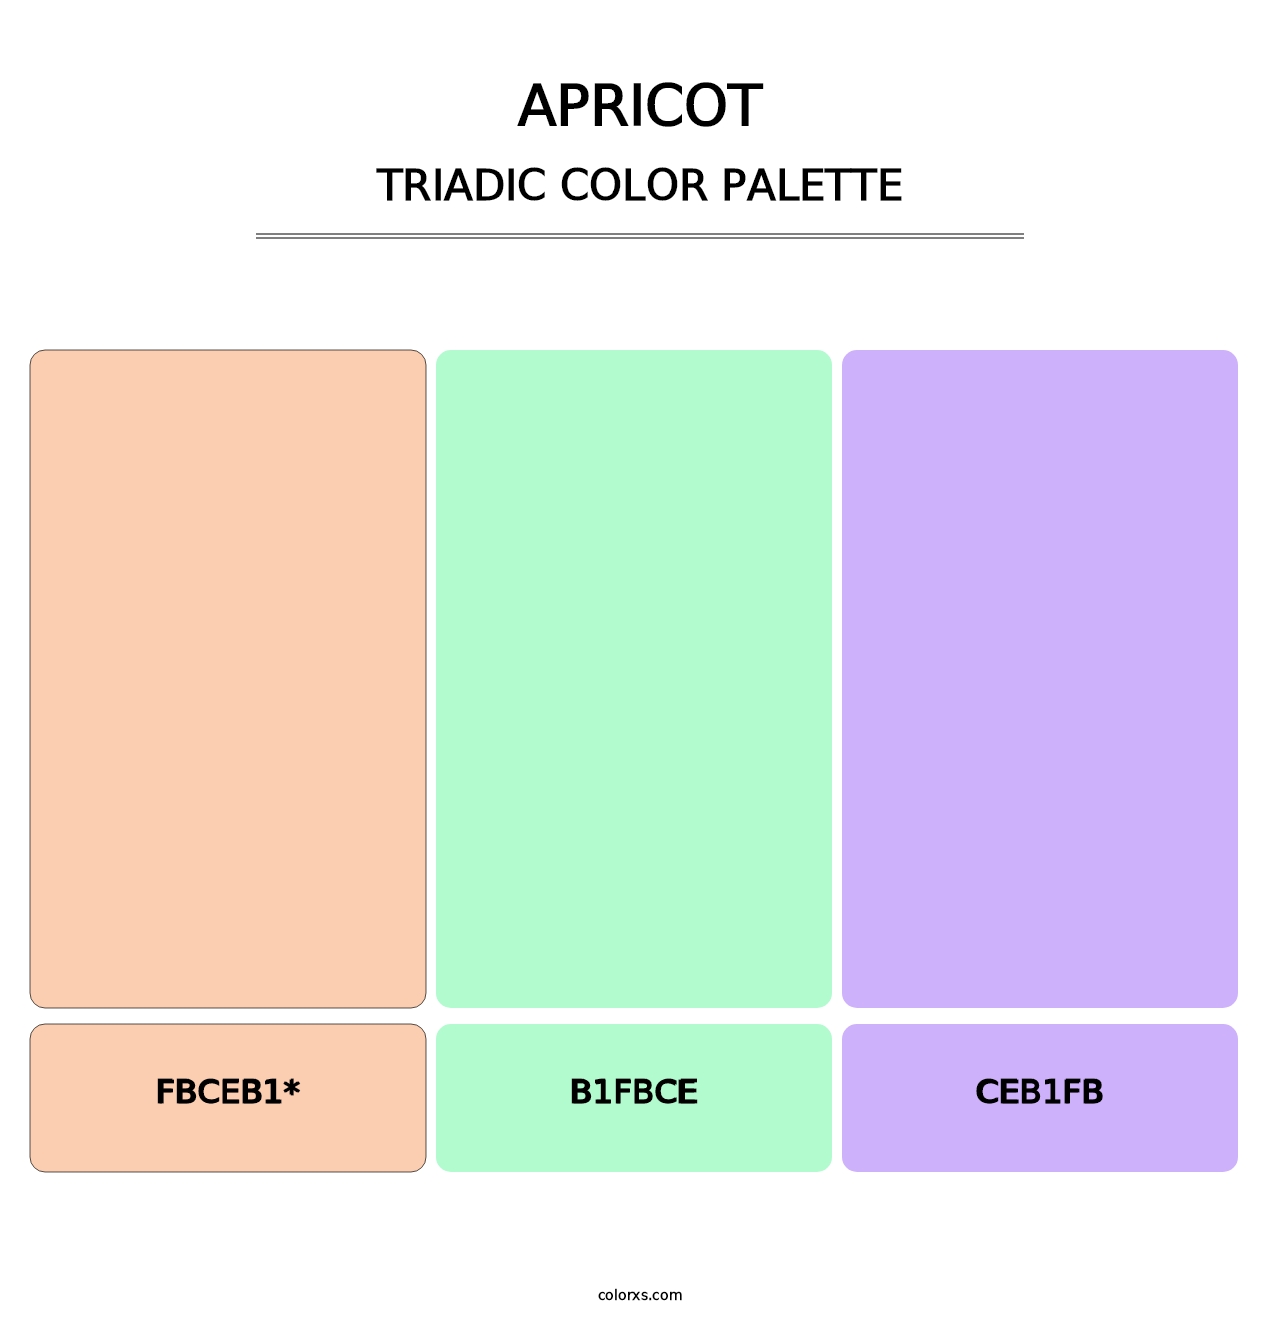 Apricot - Triadic Color Palette